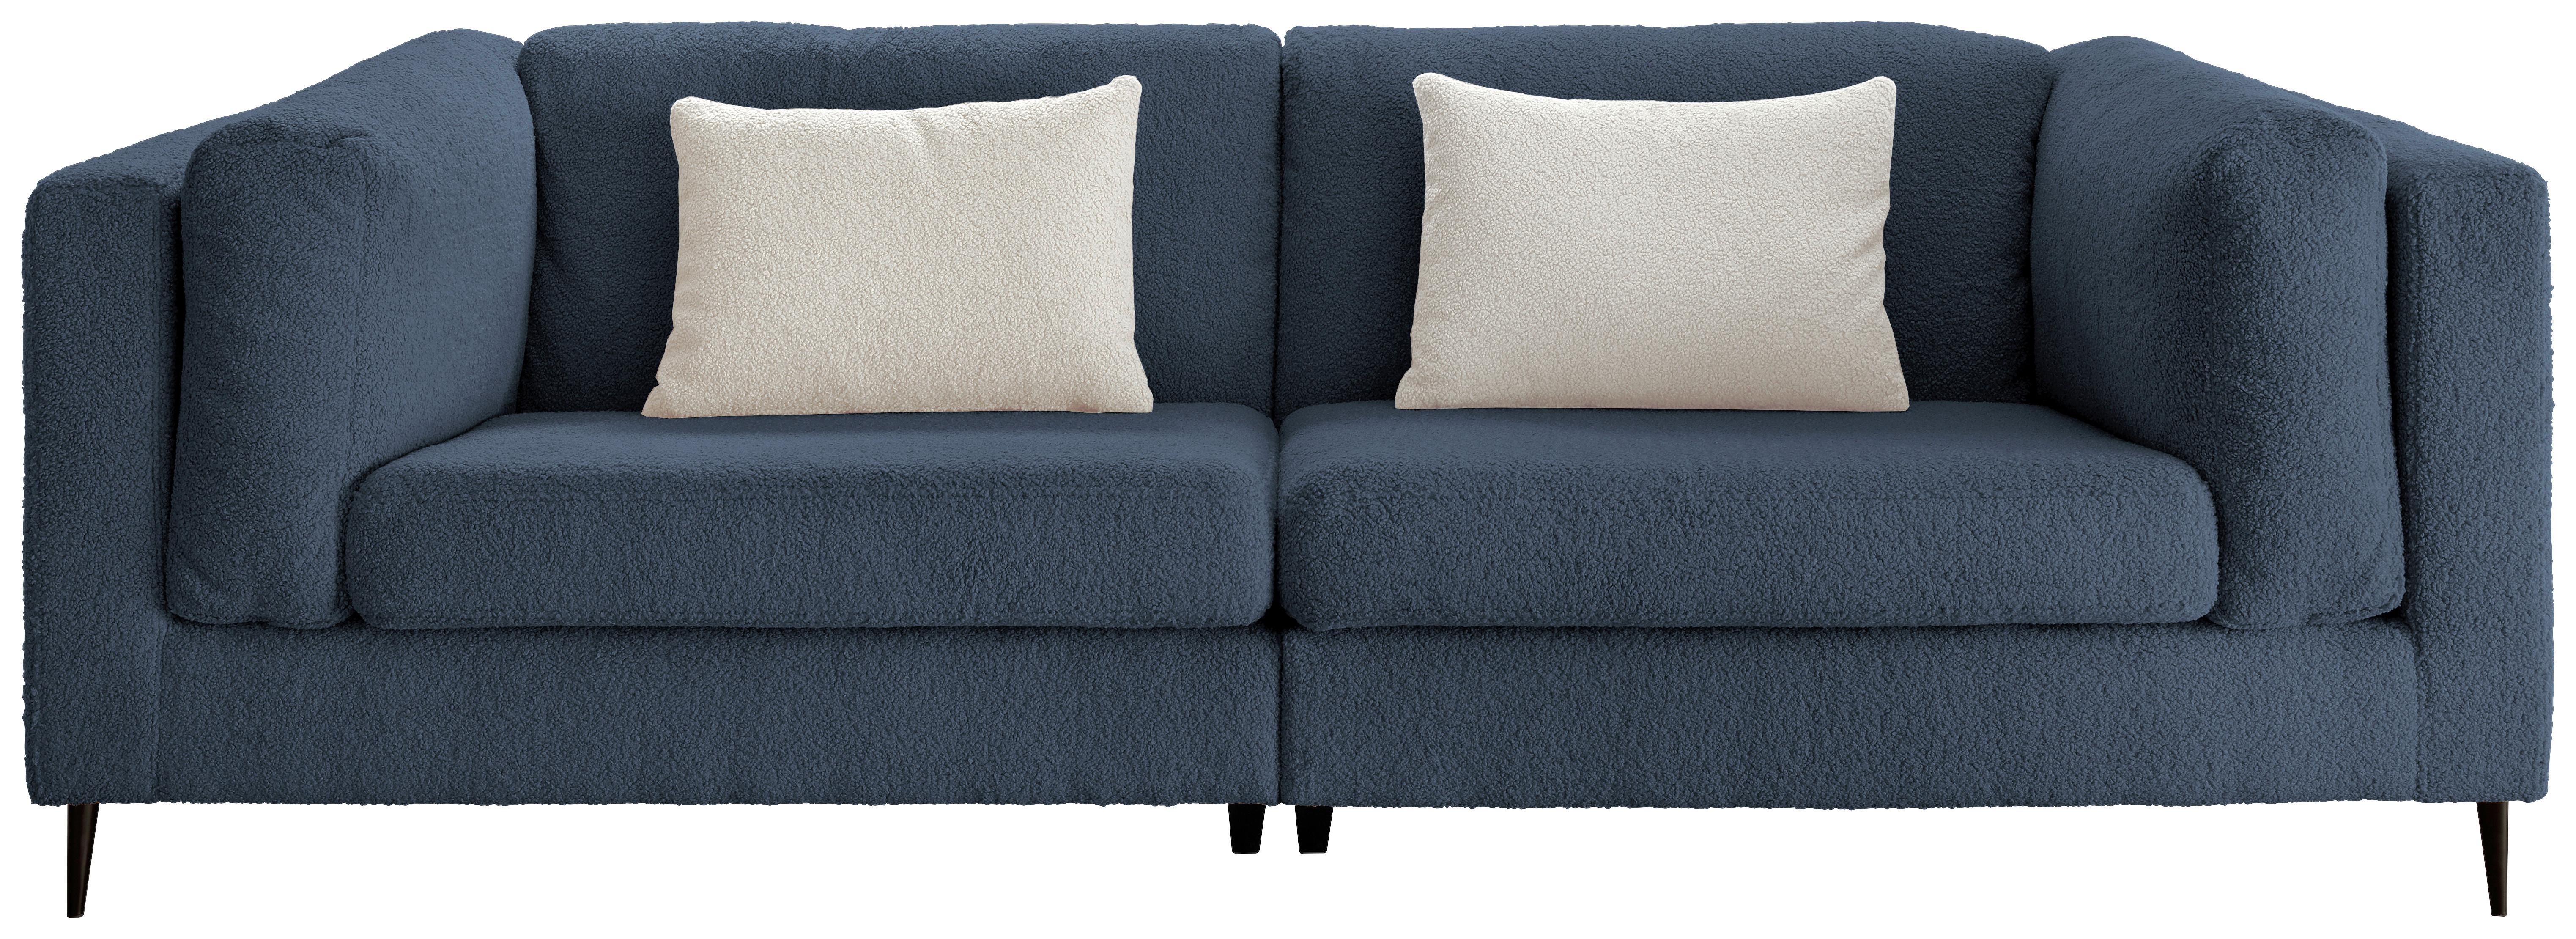 3-Sitzer-Sofa Roma Dunkelblau Teddystoff - Schwarz/Dunkelblau, Design, Textil (250/82/112cm) - Livetastic